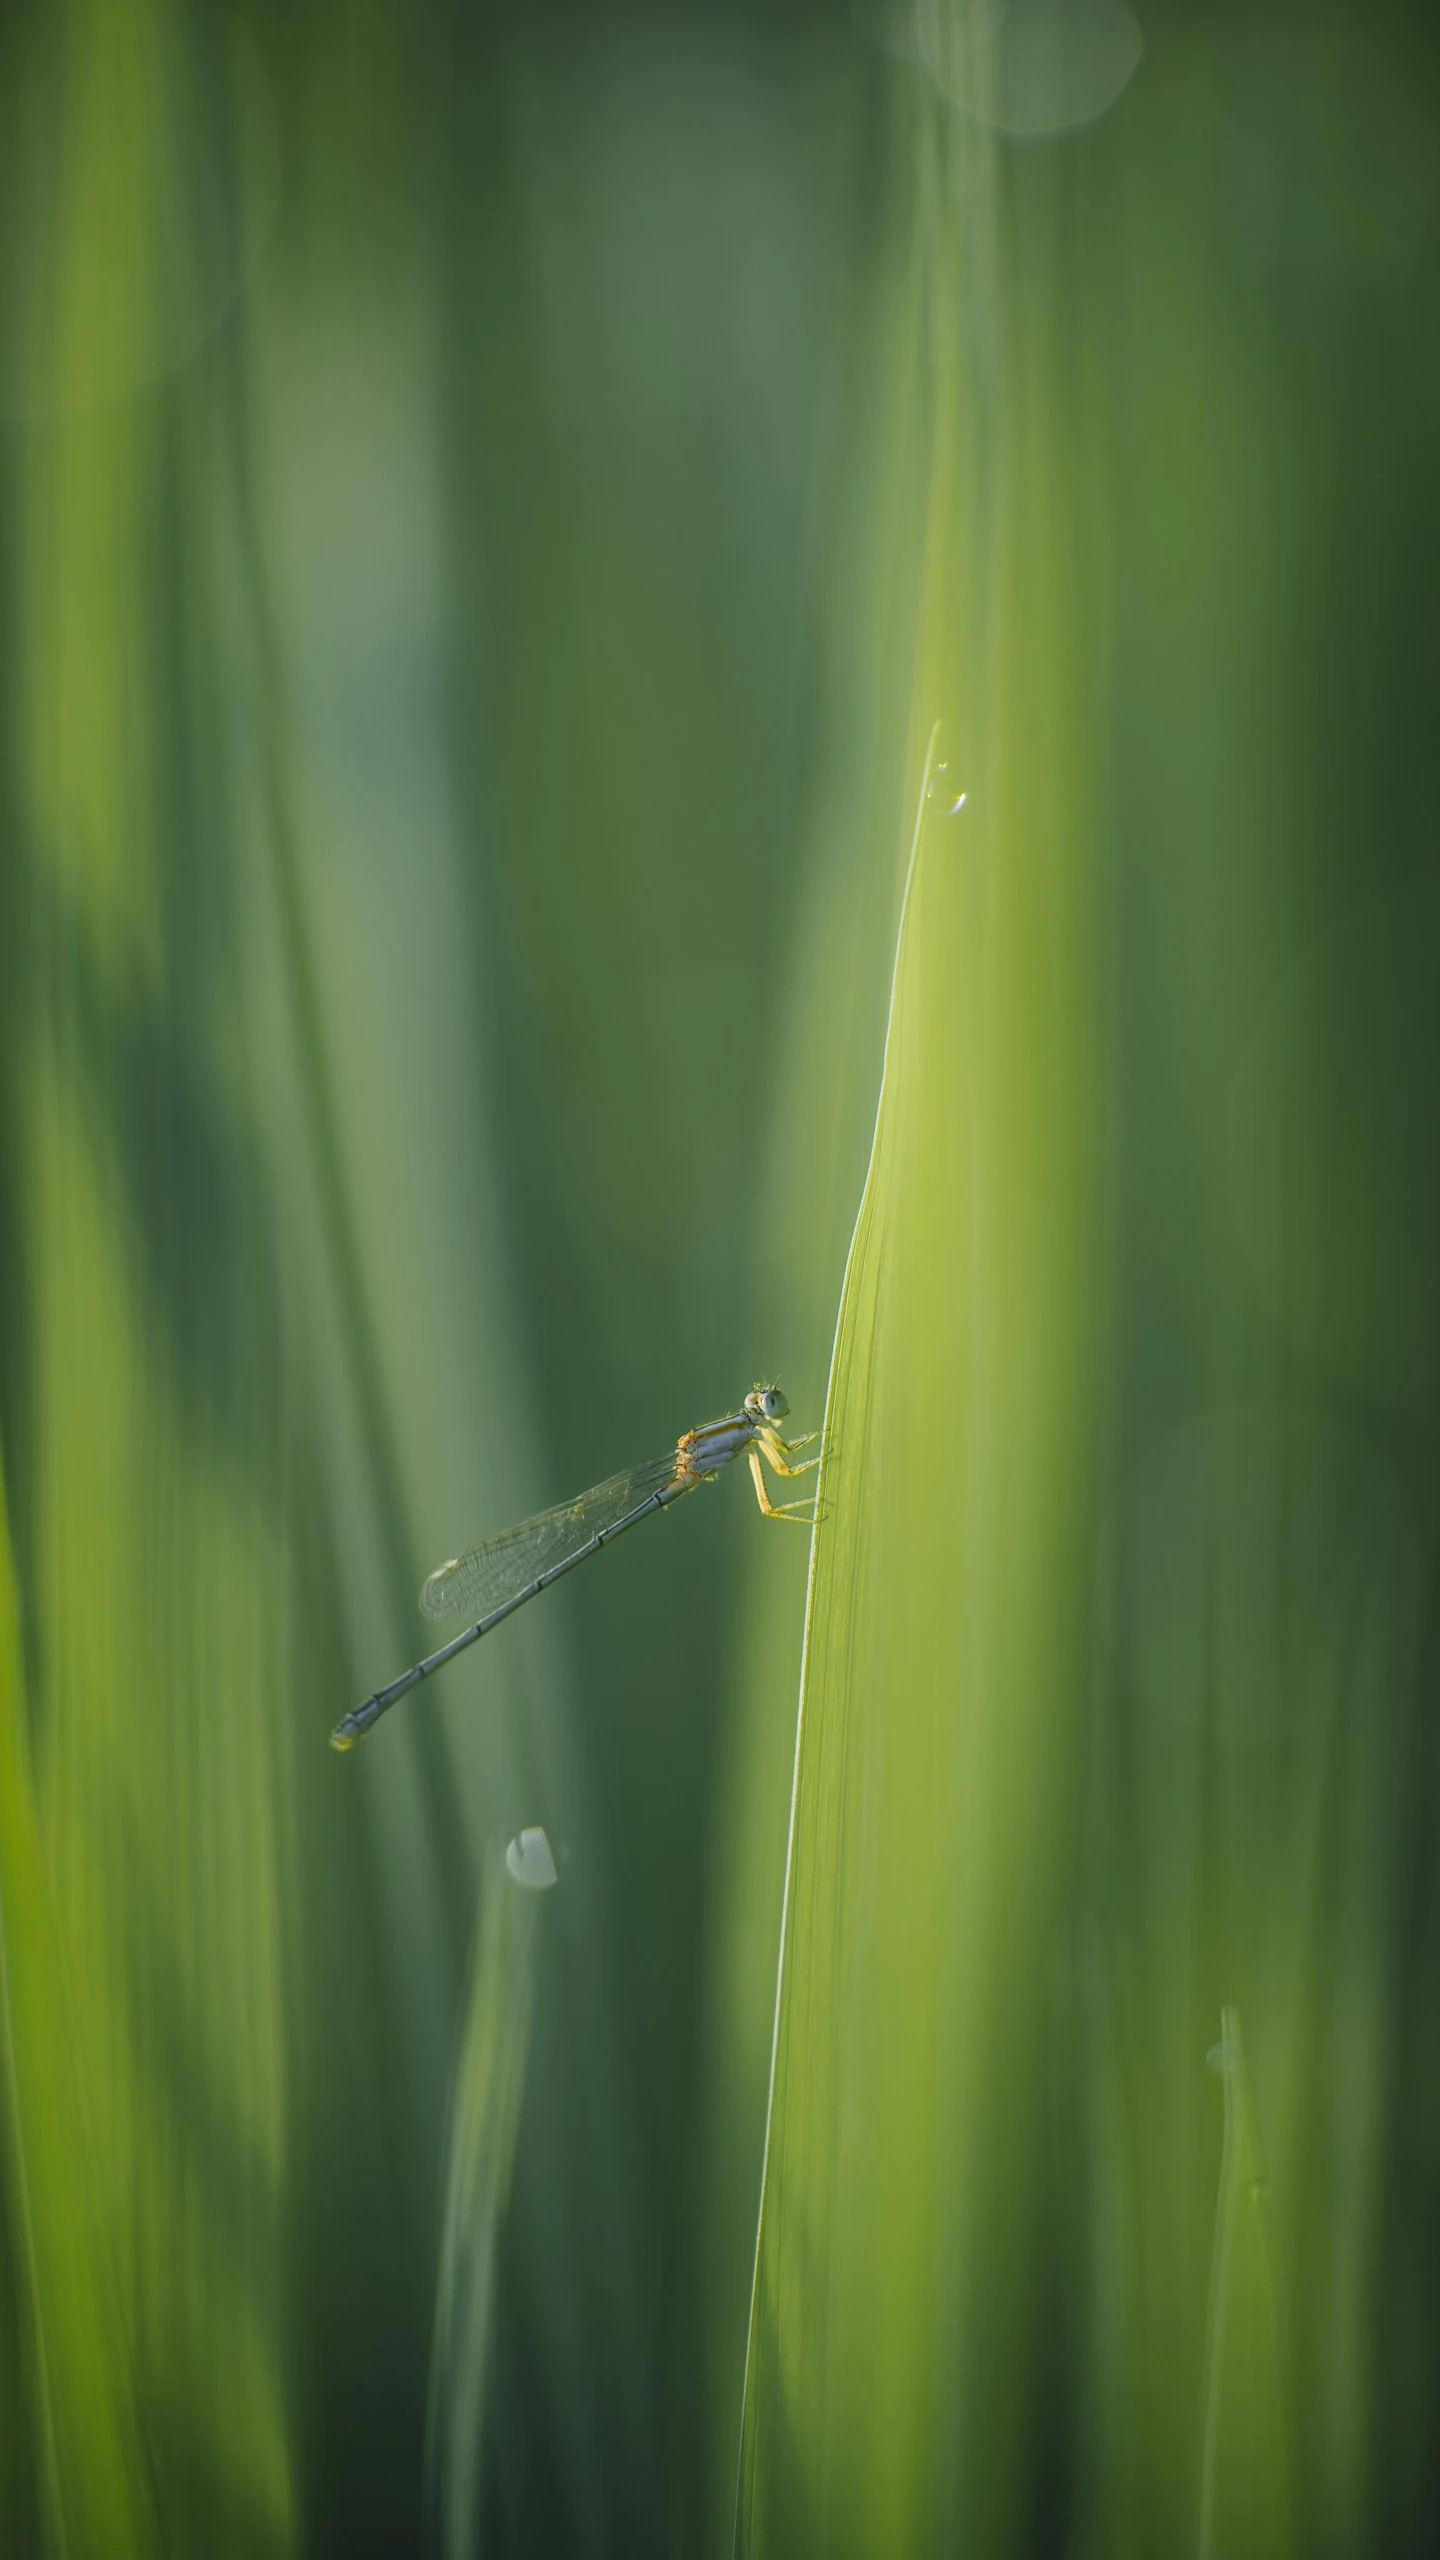 a long - legged grasshopper rests on a blade of grass